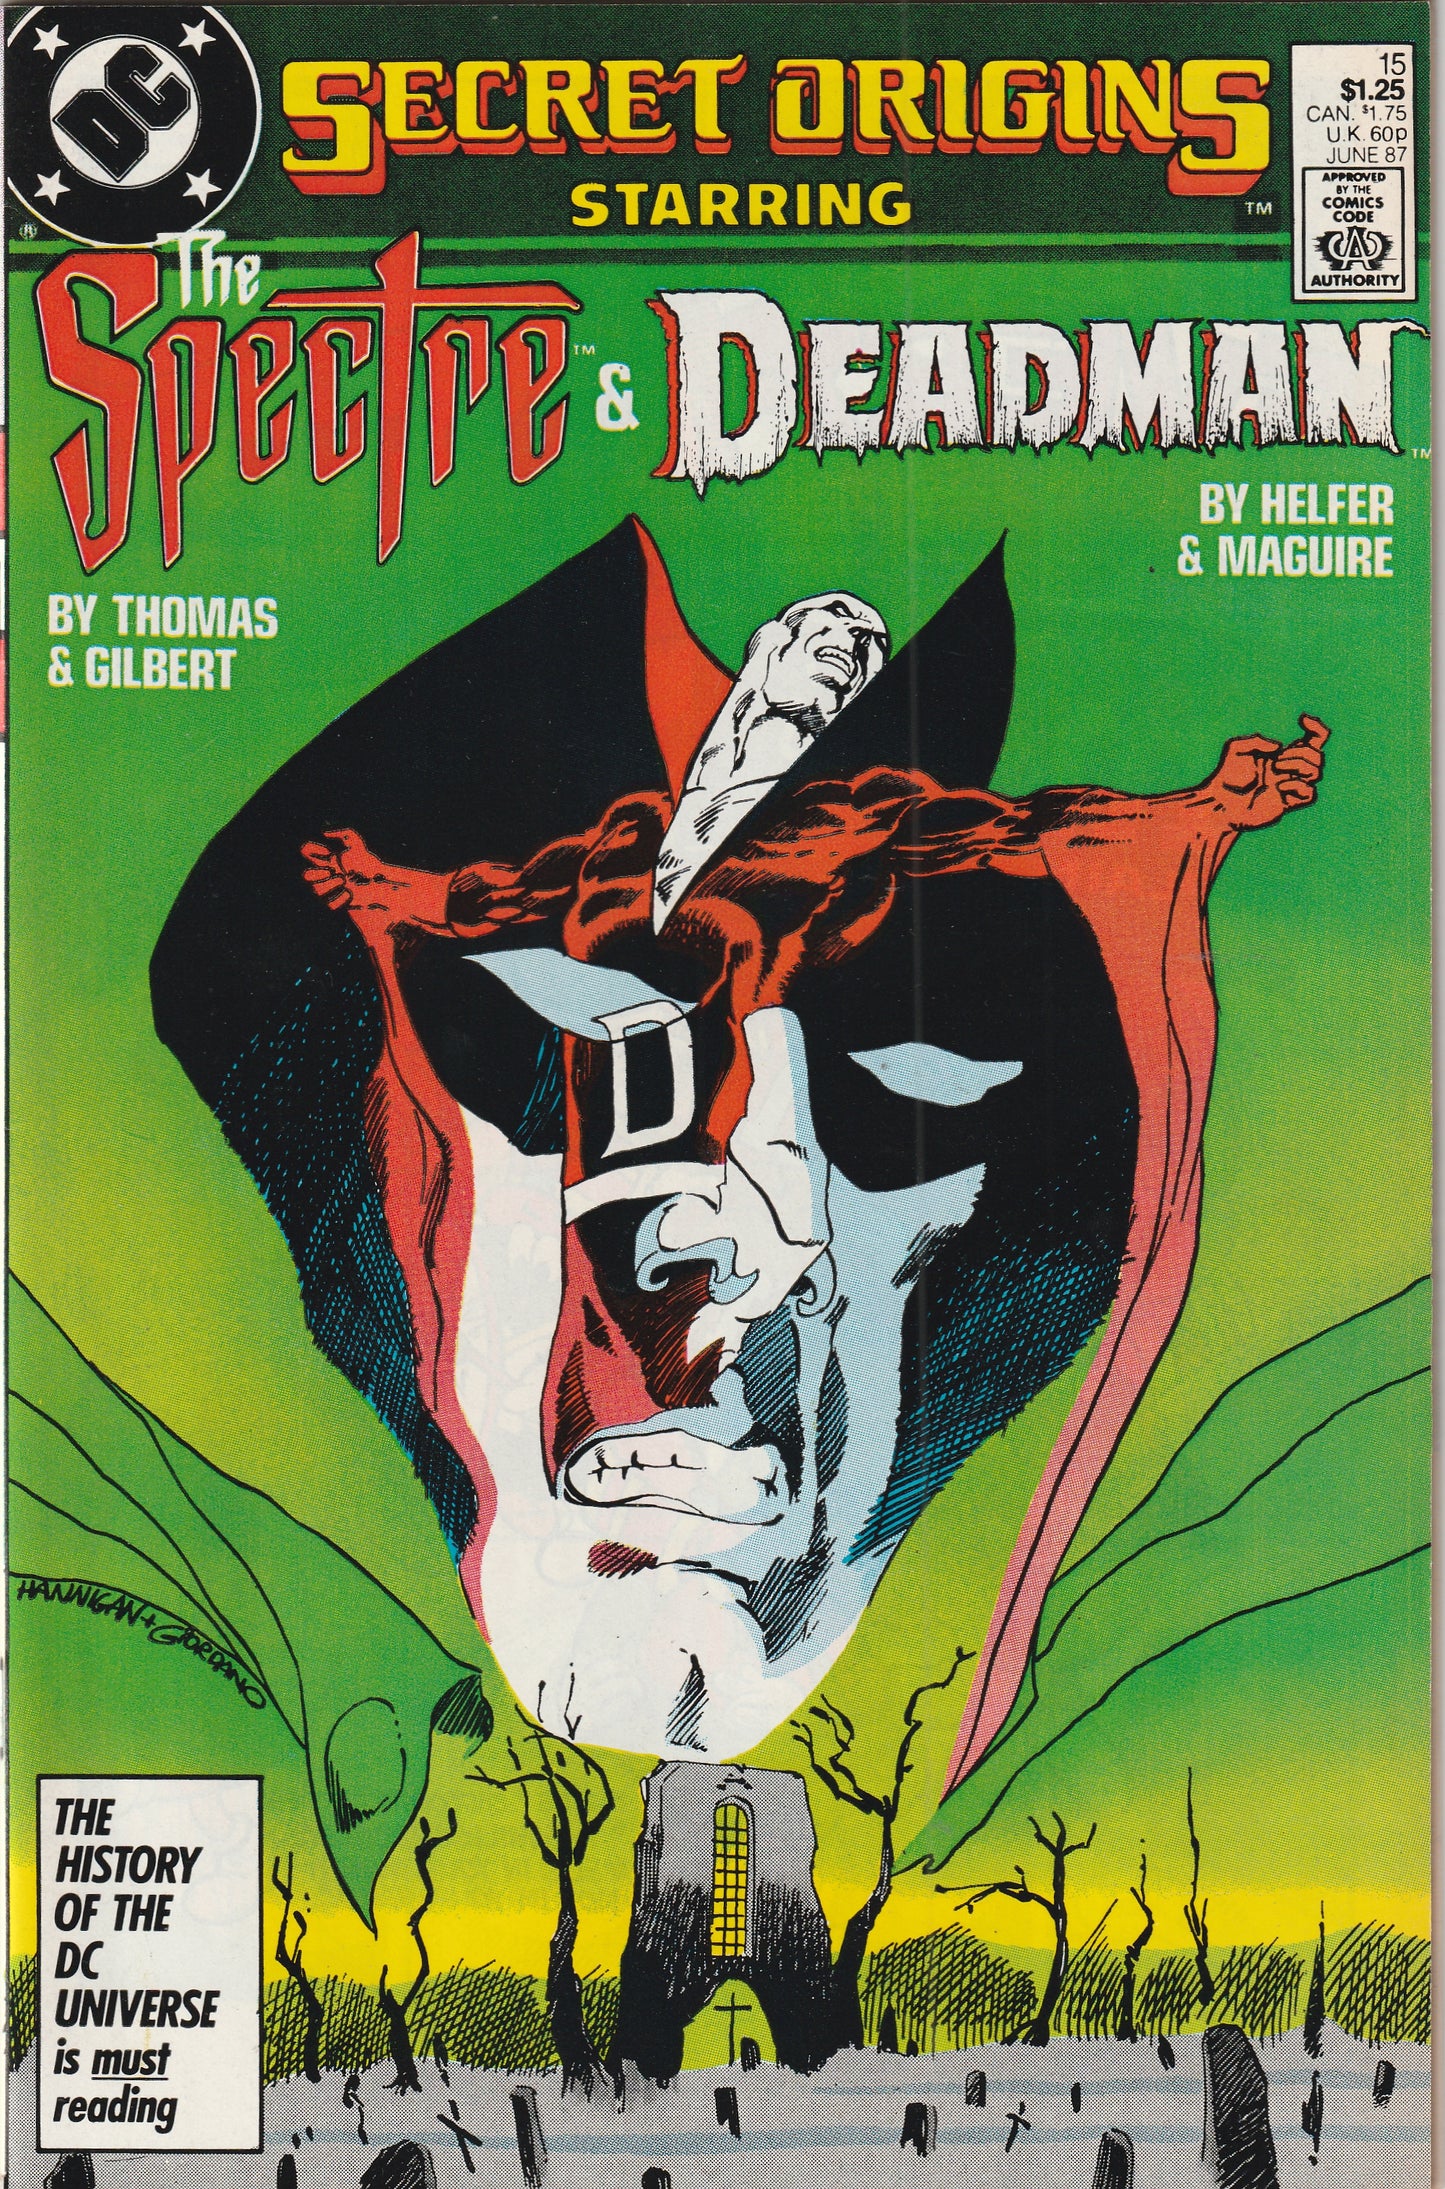 Secret Origins #15 (1987) - The Spectre & Deadman